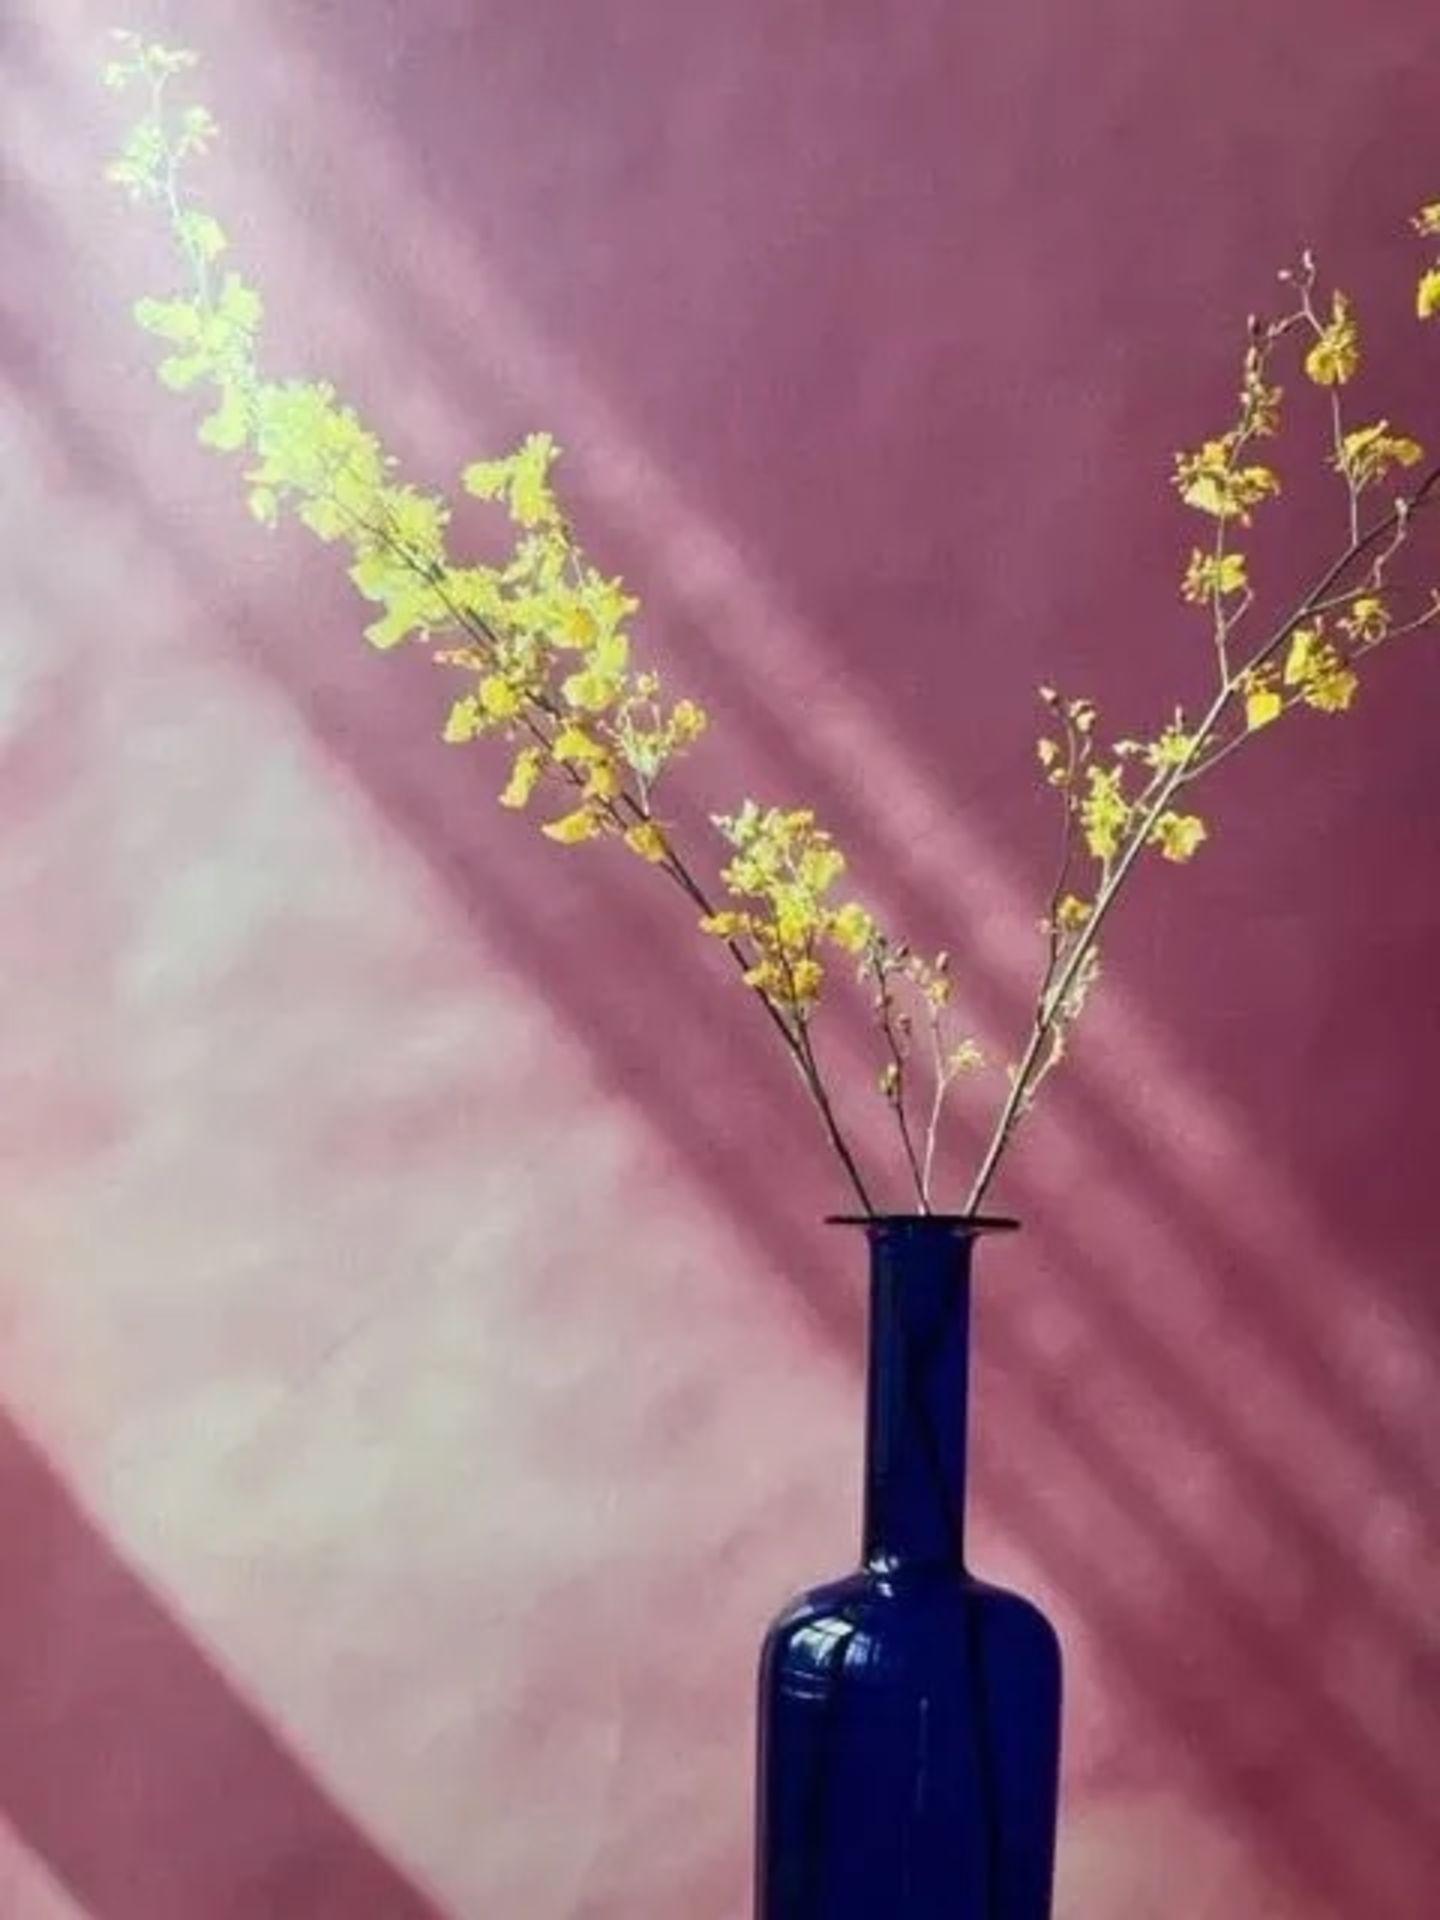 Robert Mapplethorpe "Flowers in Vase" Print - Bild 3 aus 6